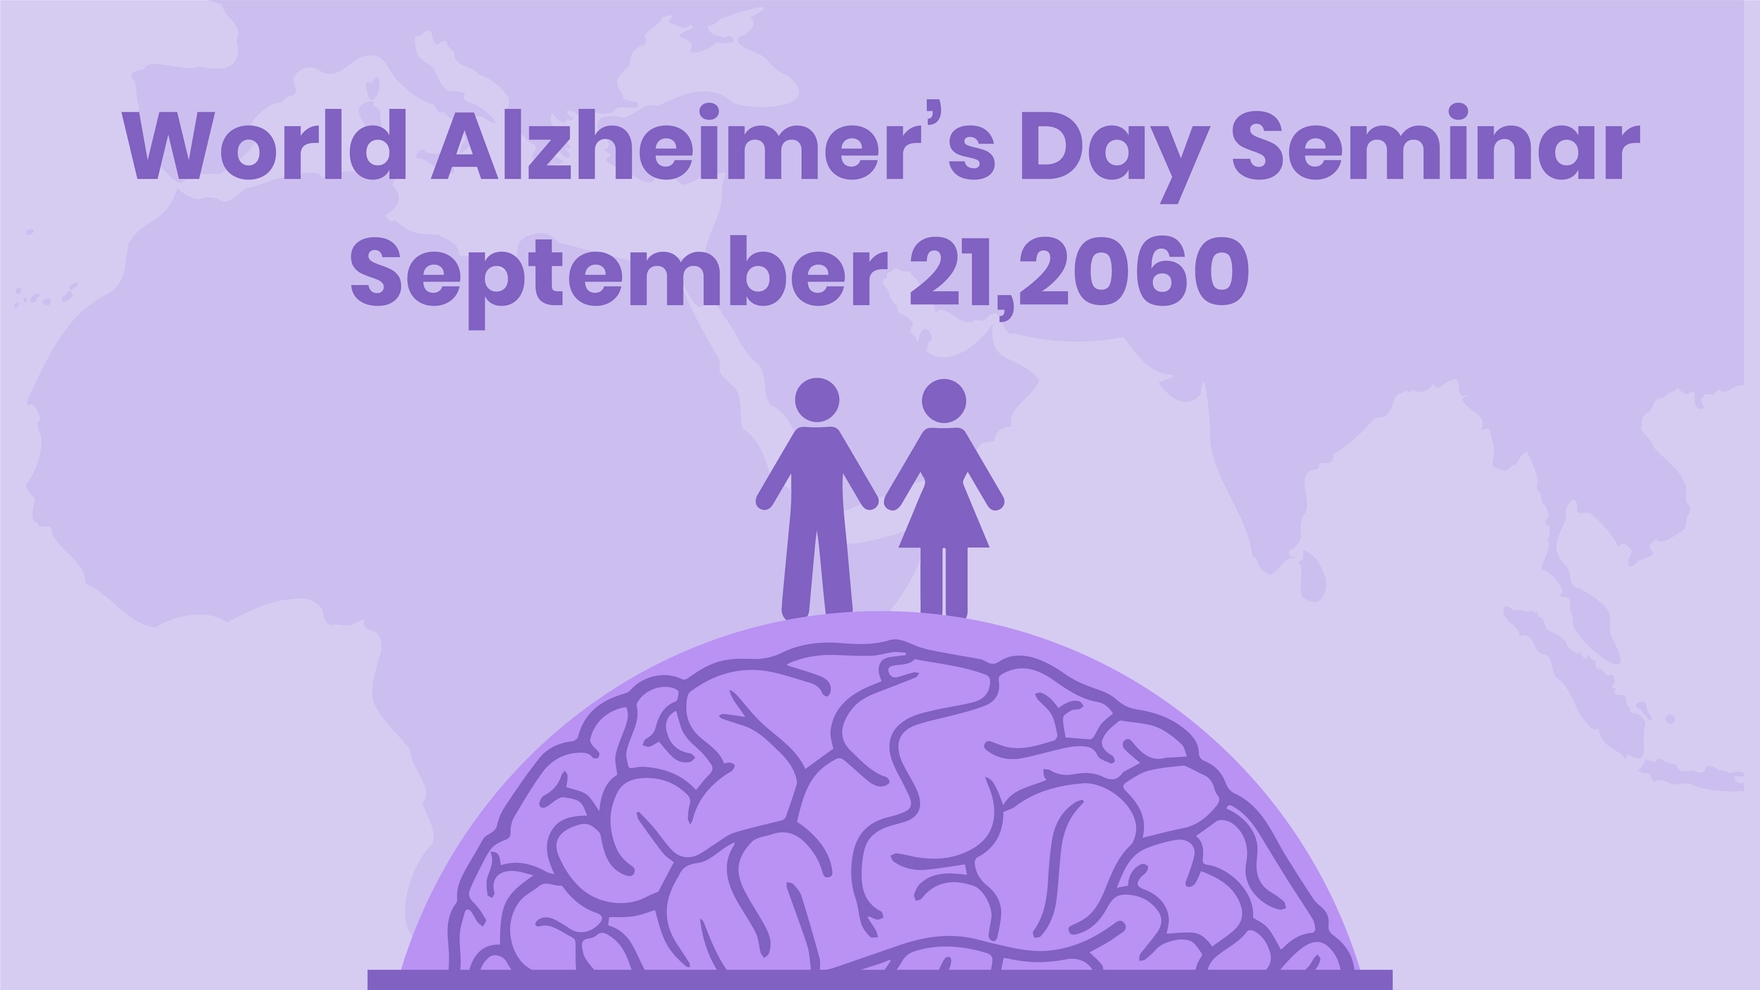 World Alzheimer’s Day Invitation Background